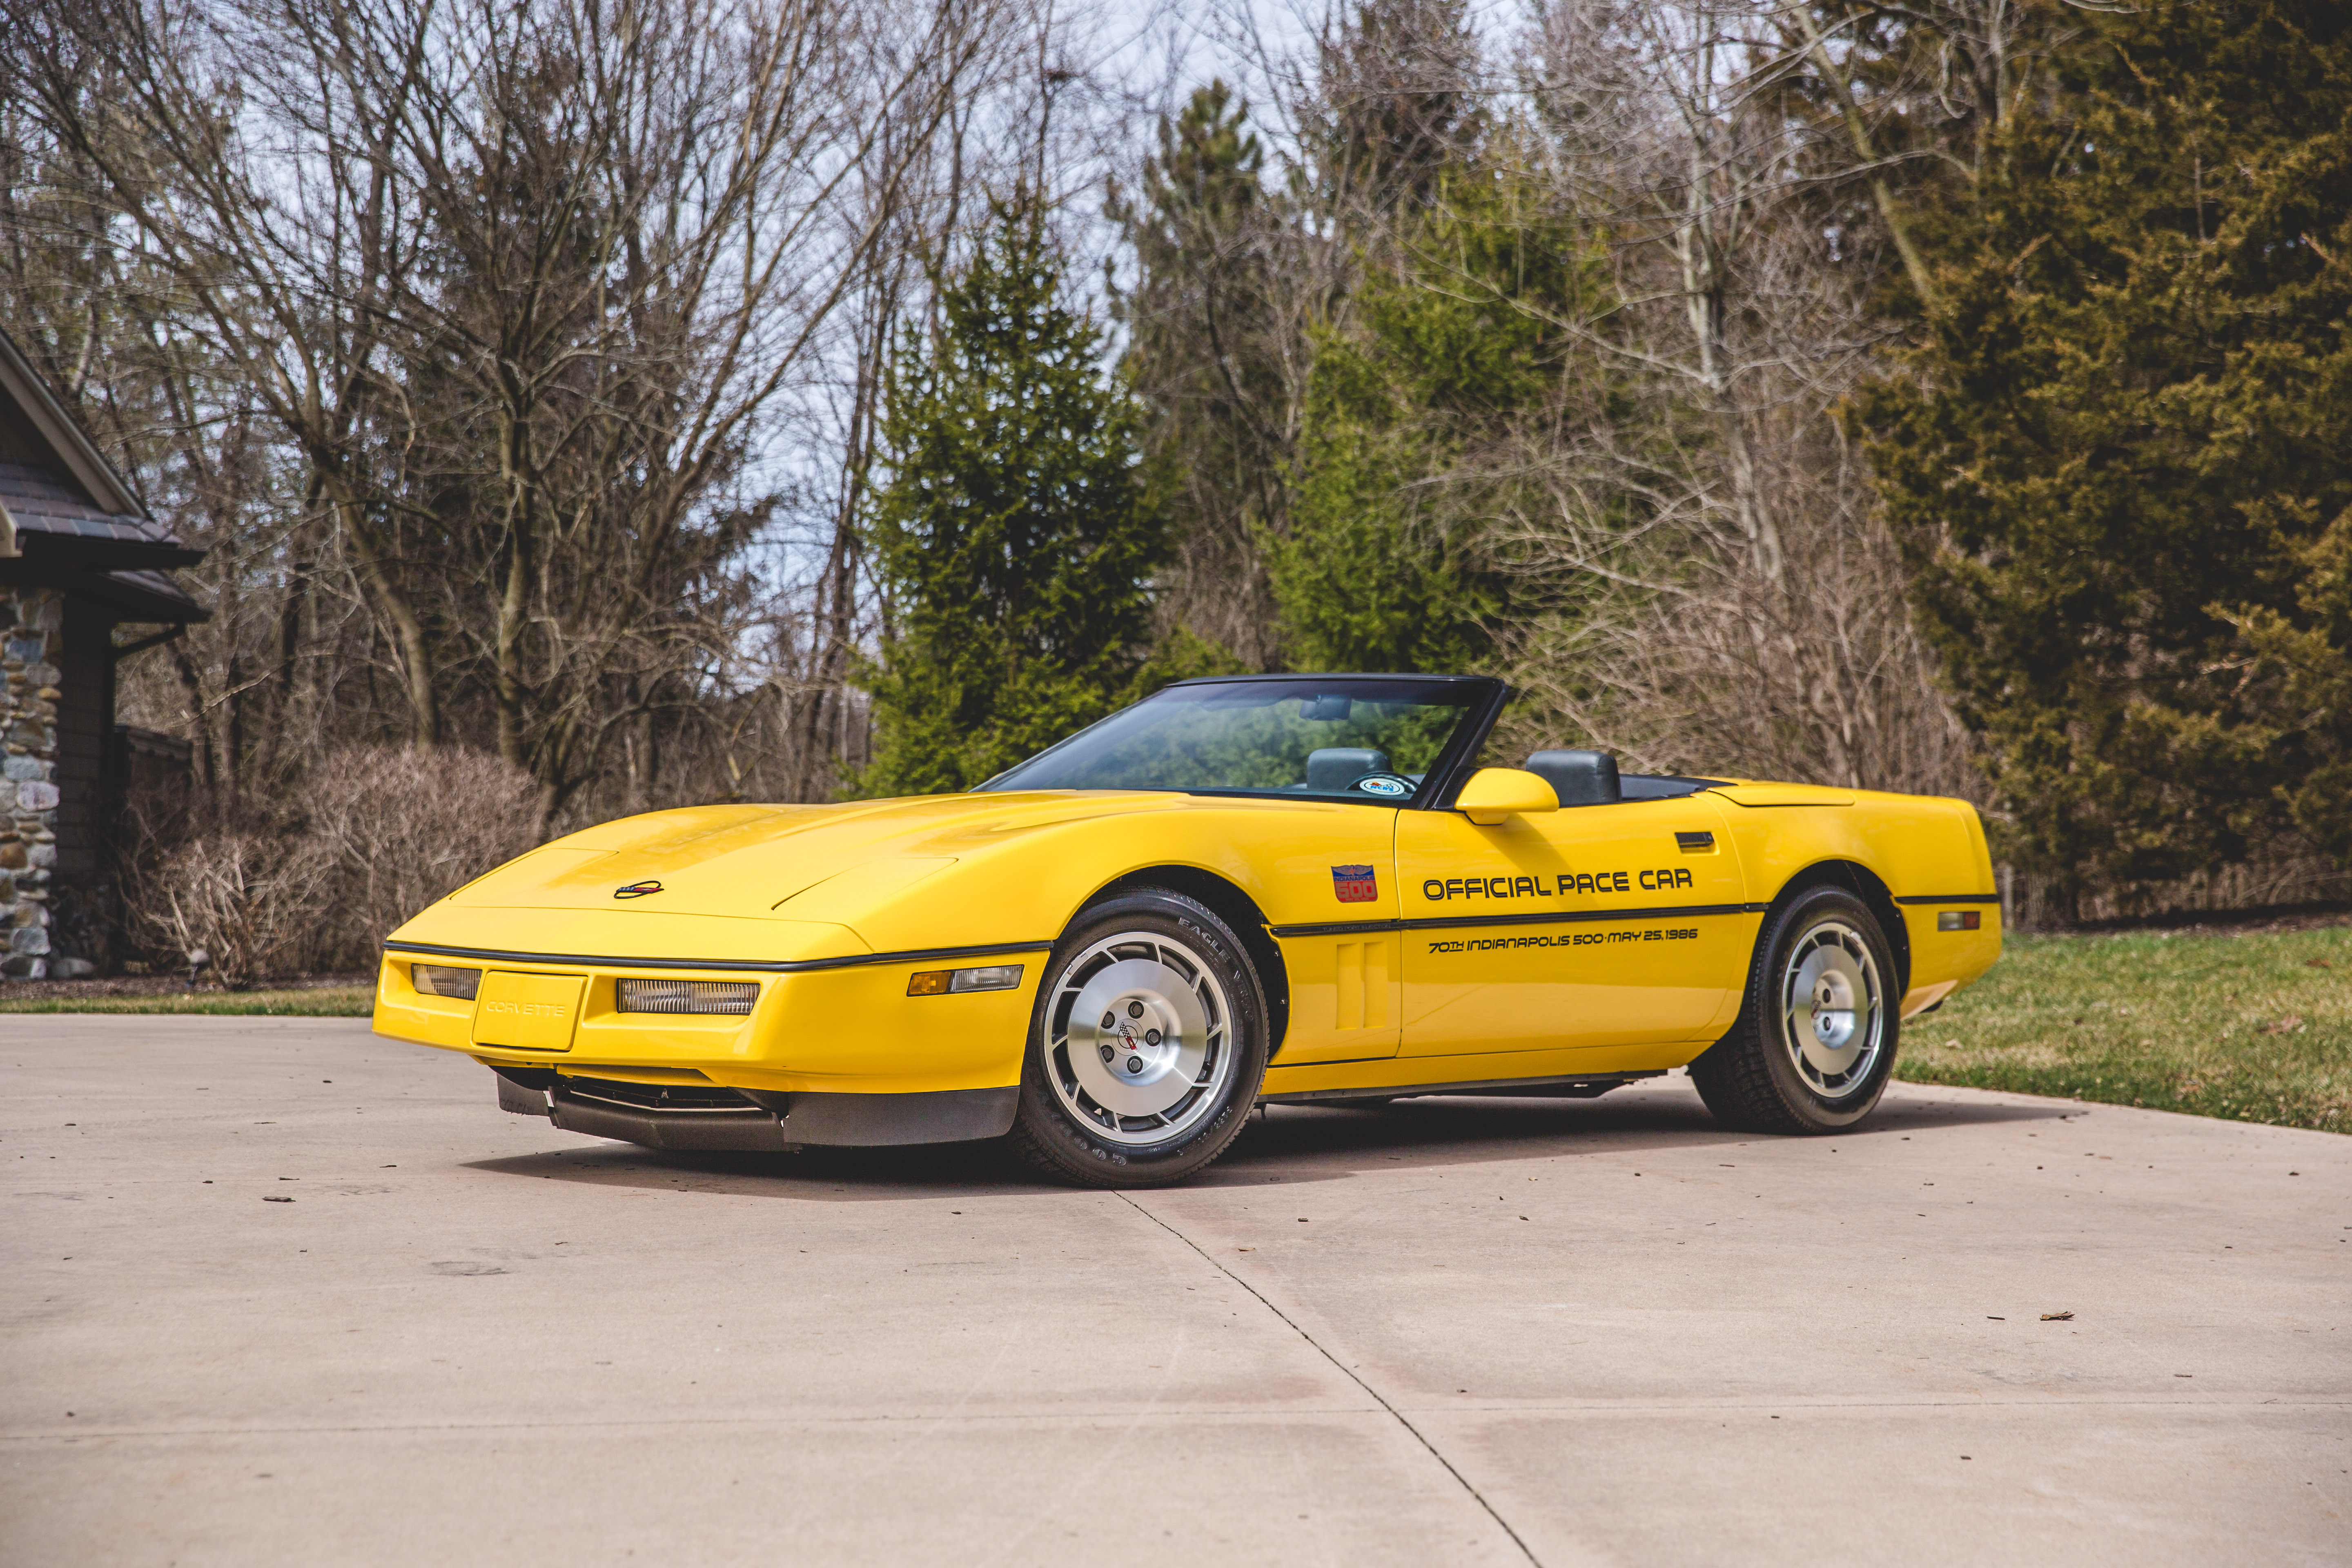 Corvette, Indy pace car collection on Mecum docket, ClassicCars.com Journal